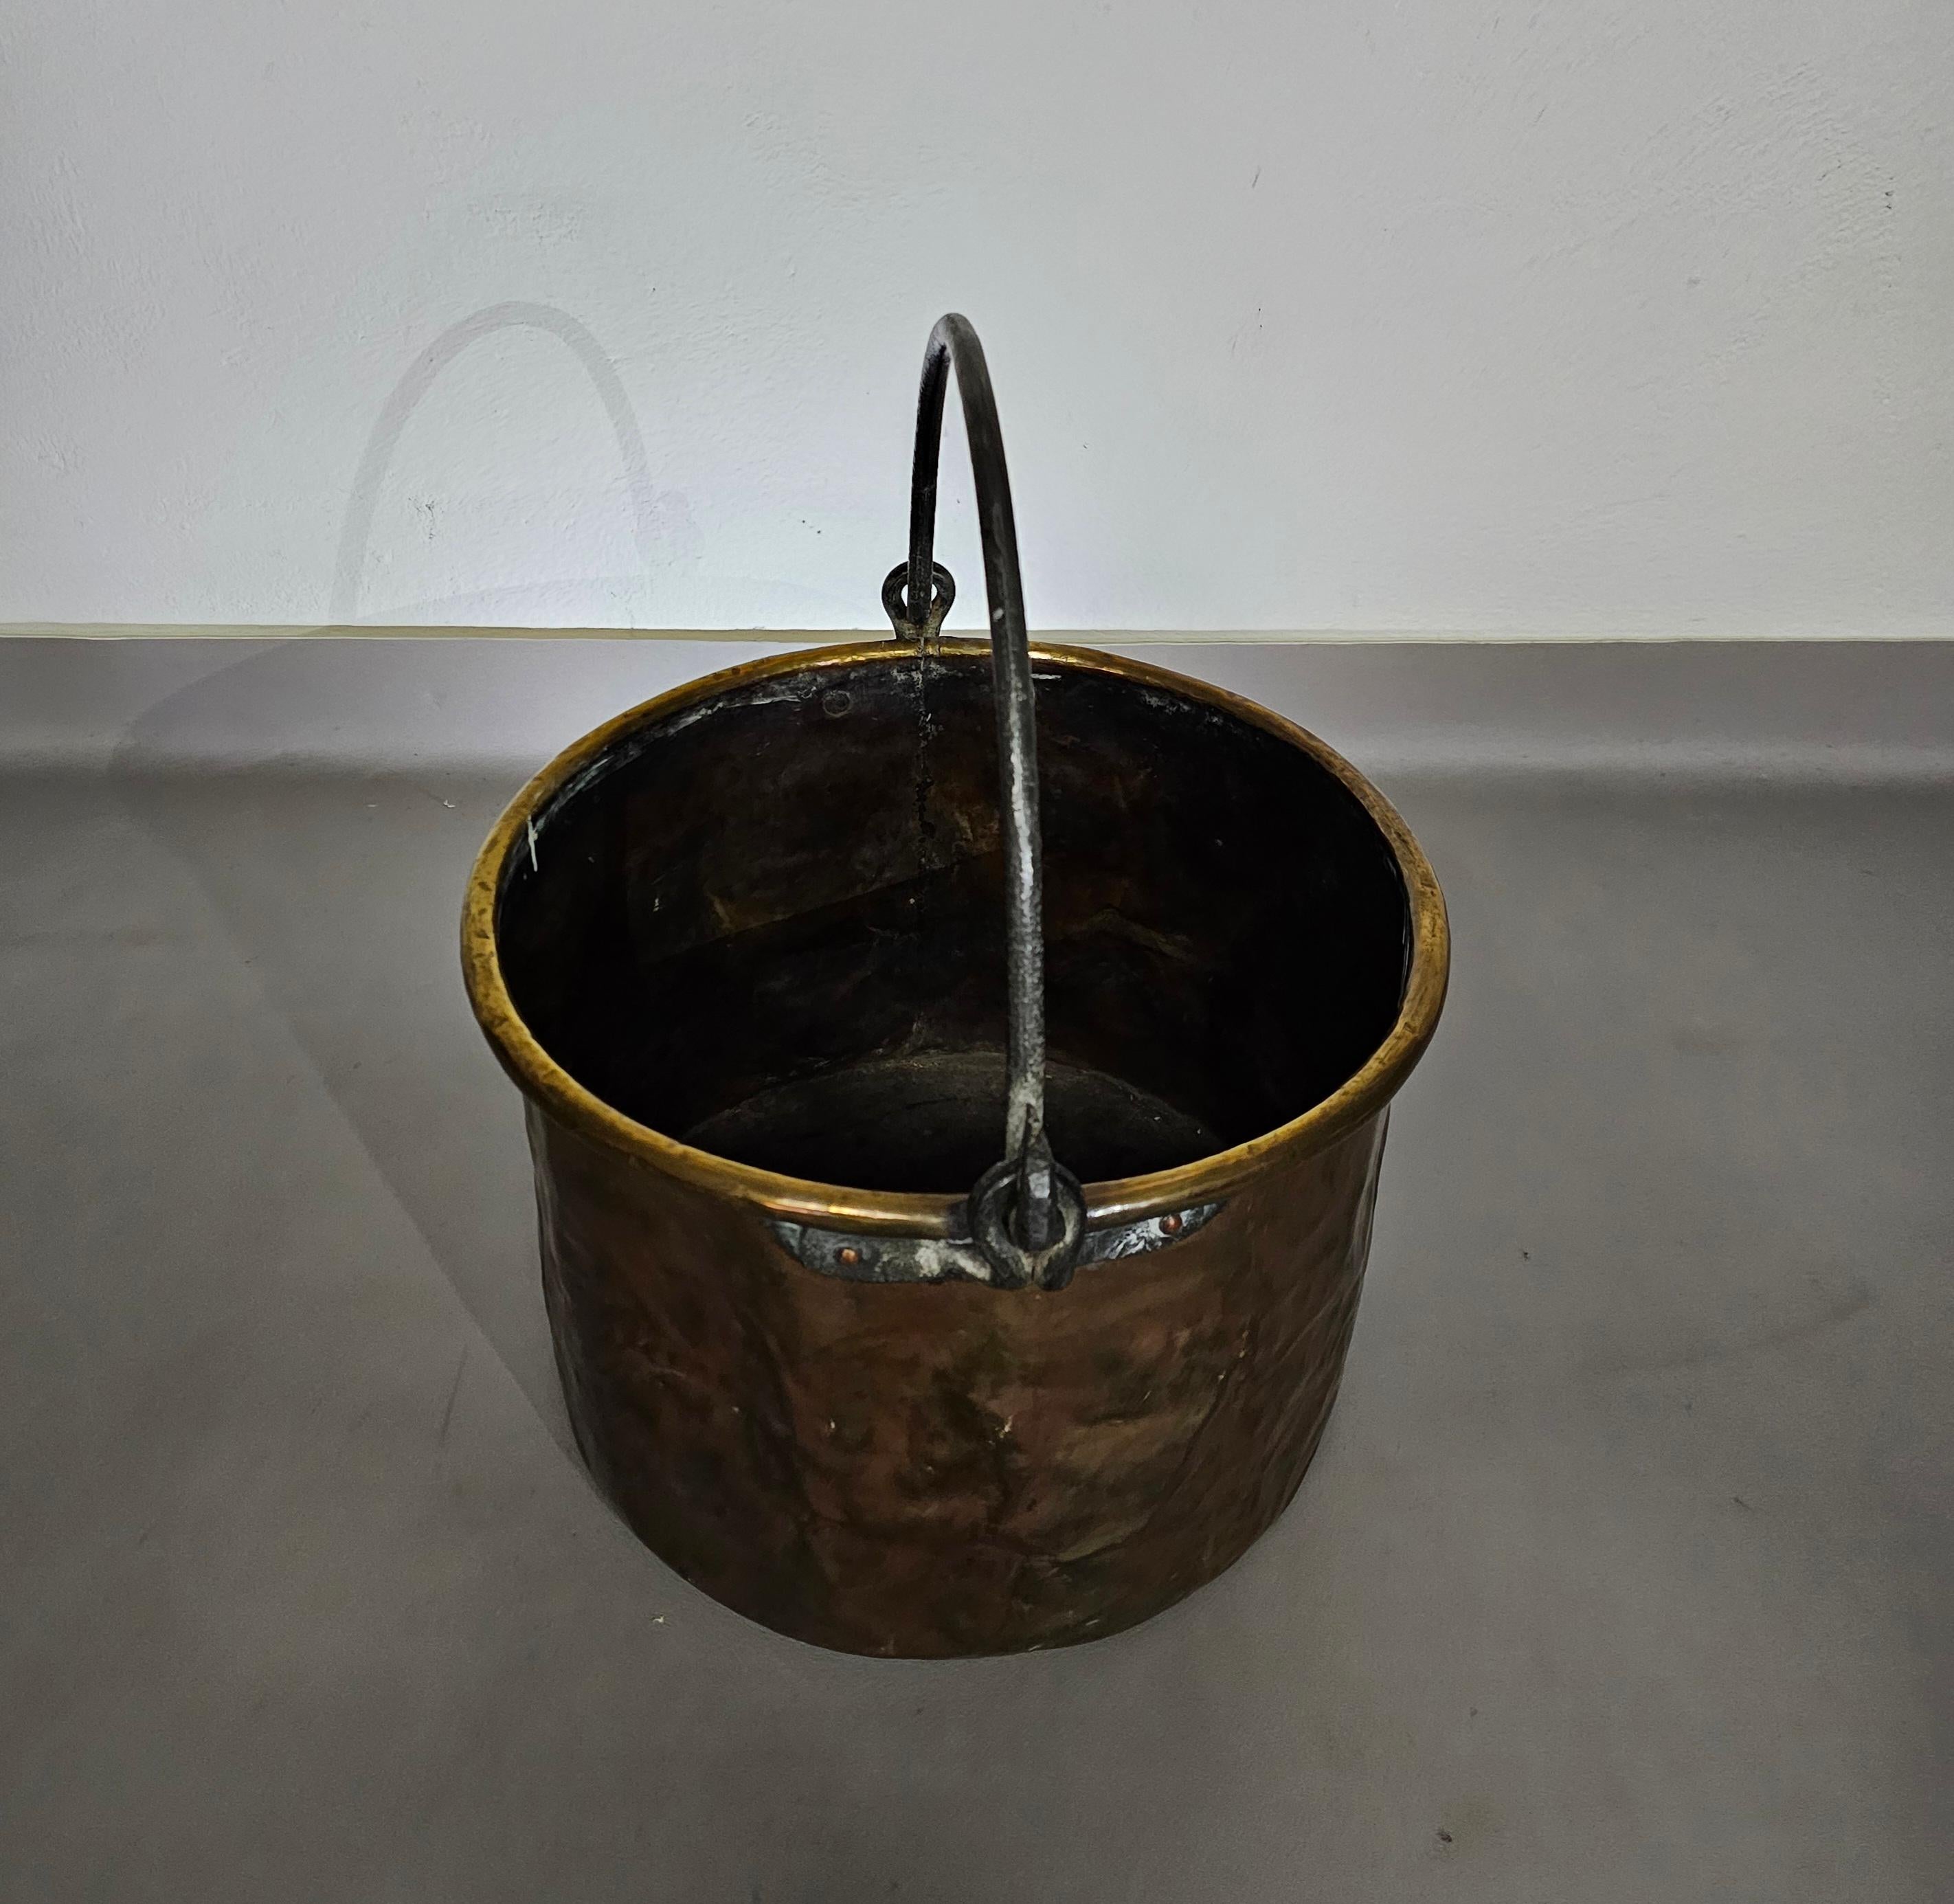  Dutch / Handled Fireplace - Copper / Brass - Bucket  For Sale 4